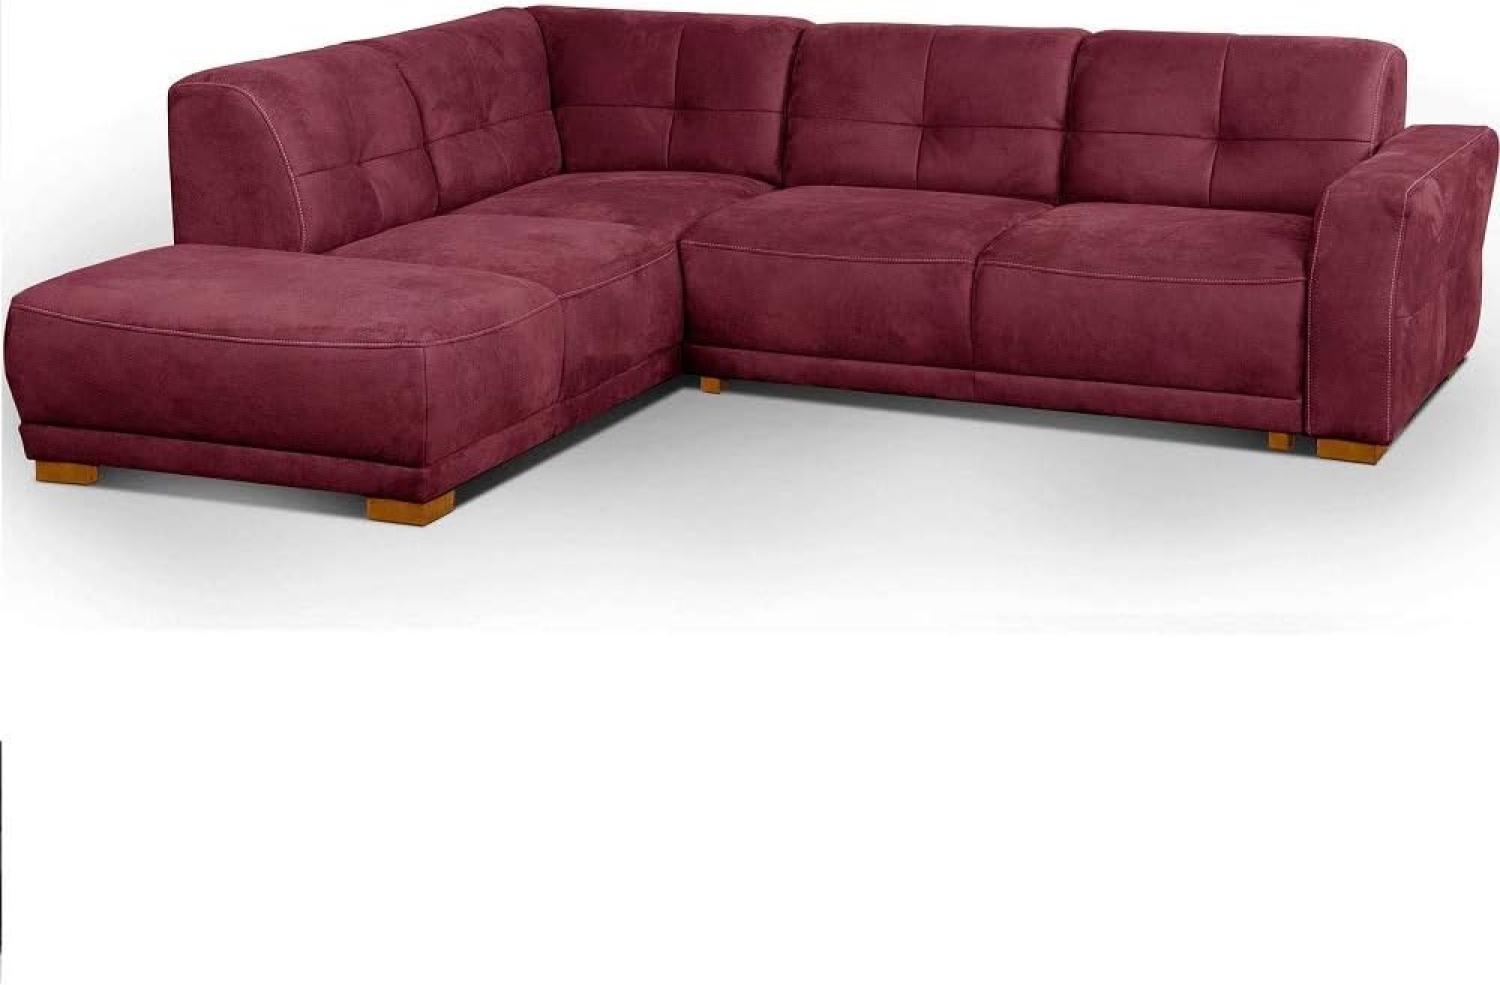 Cavadore Ecksofa Modeo, mit Federkern, Sofa in L-Form im modernen Landhausstil, Holzfüße, 261 x 77 x 214, Lederoptik, rot Bild 1